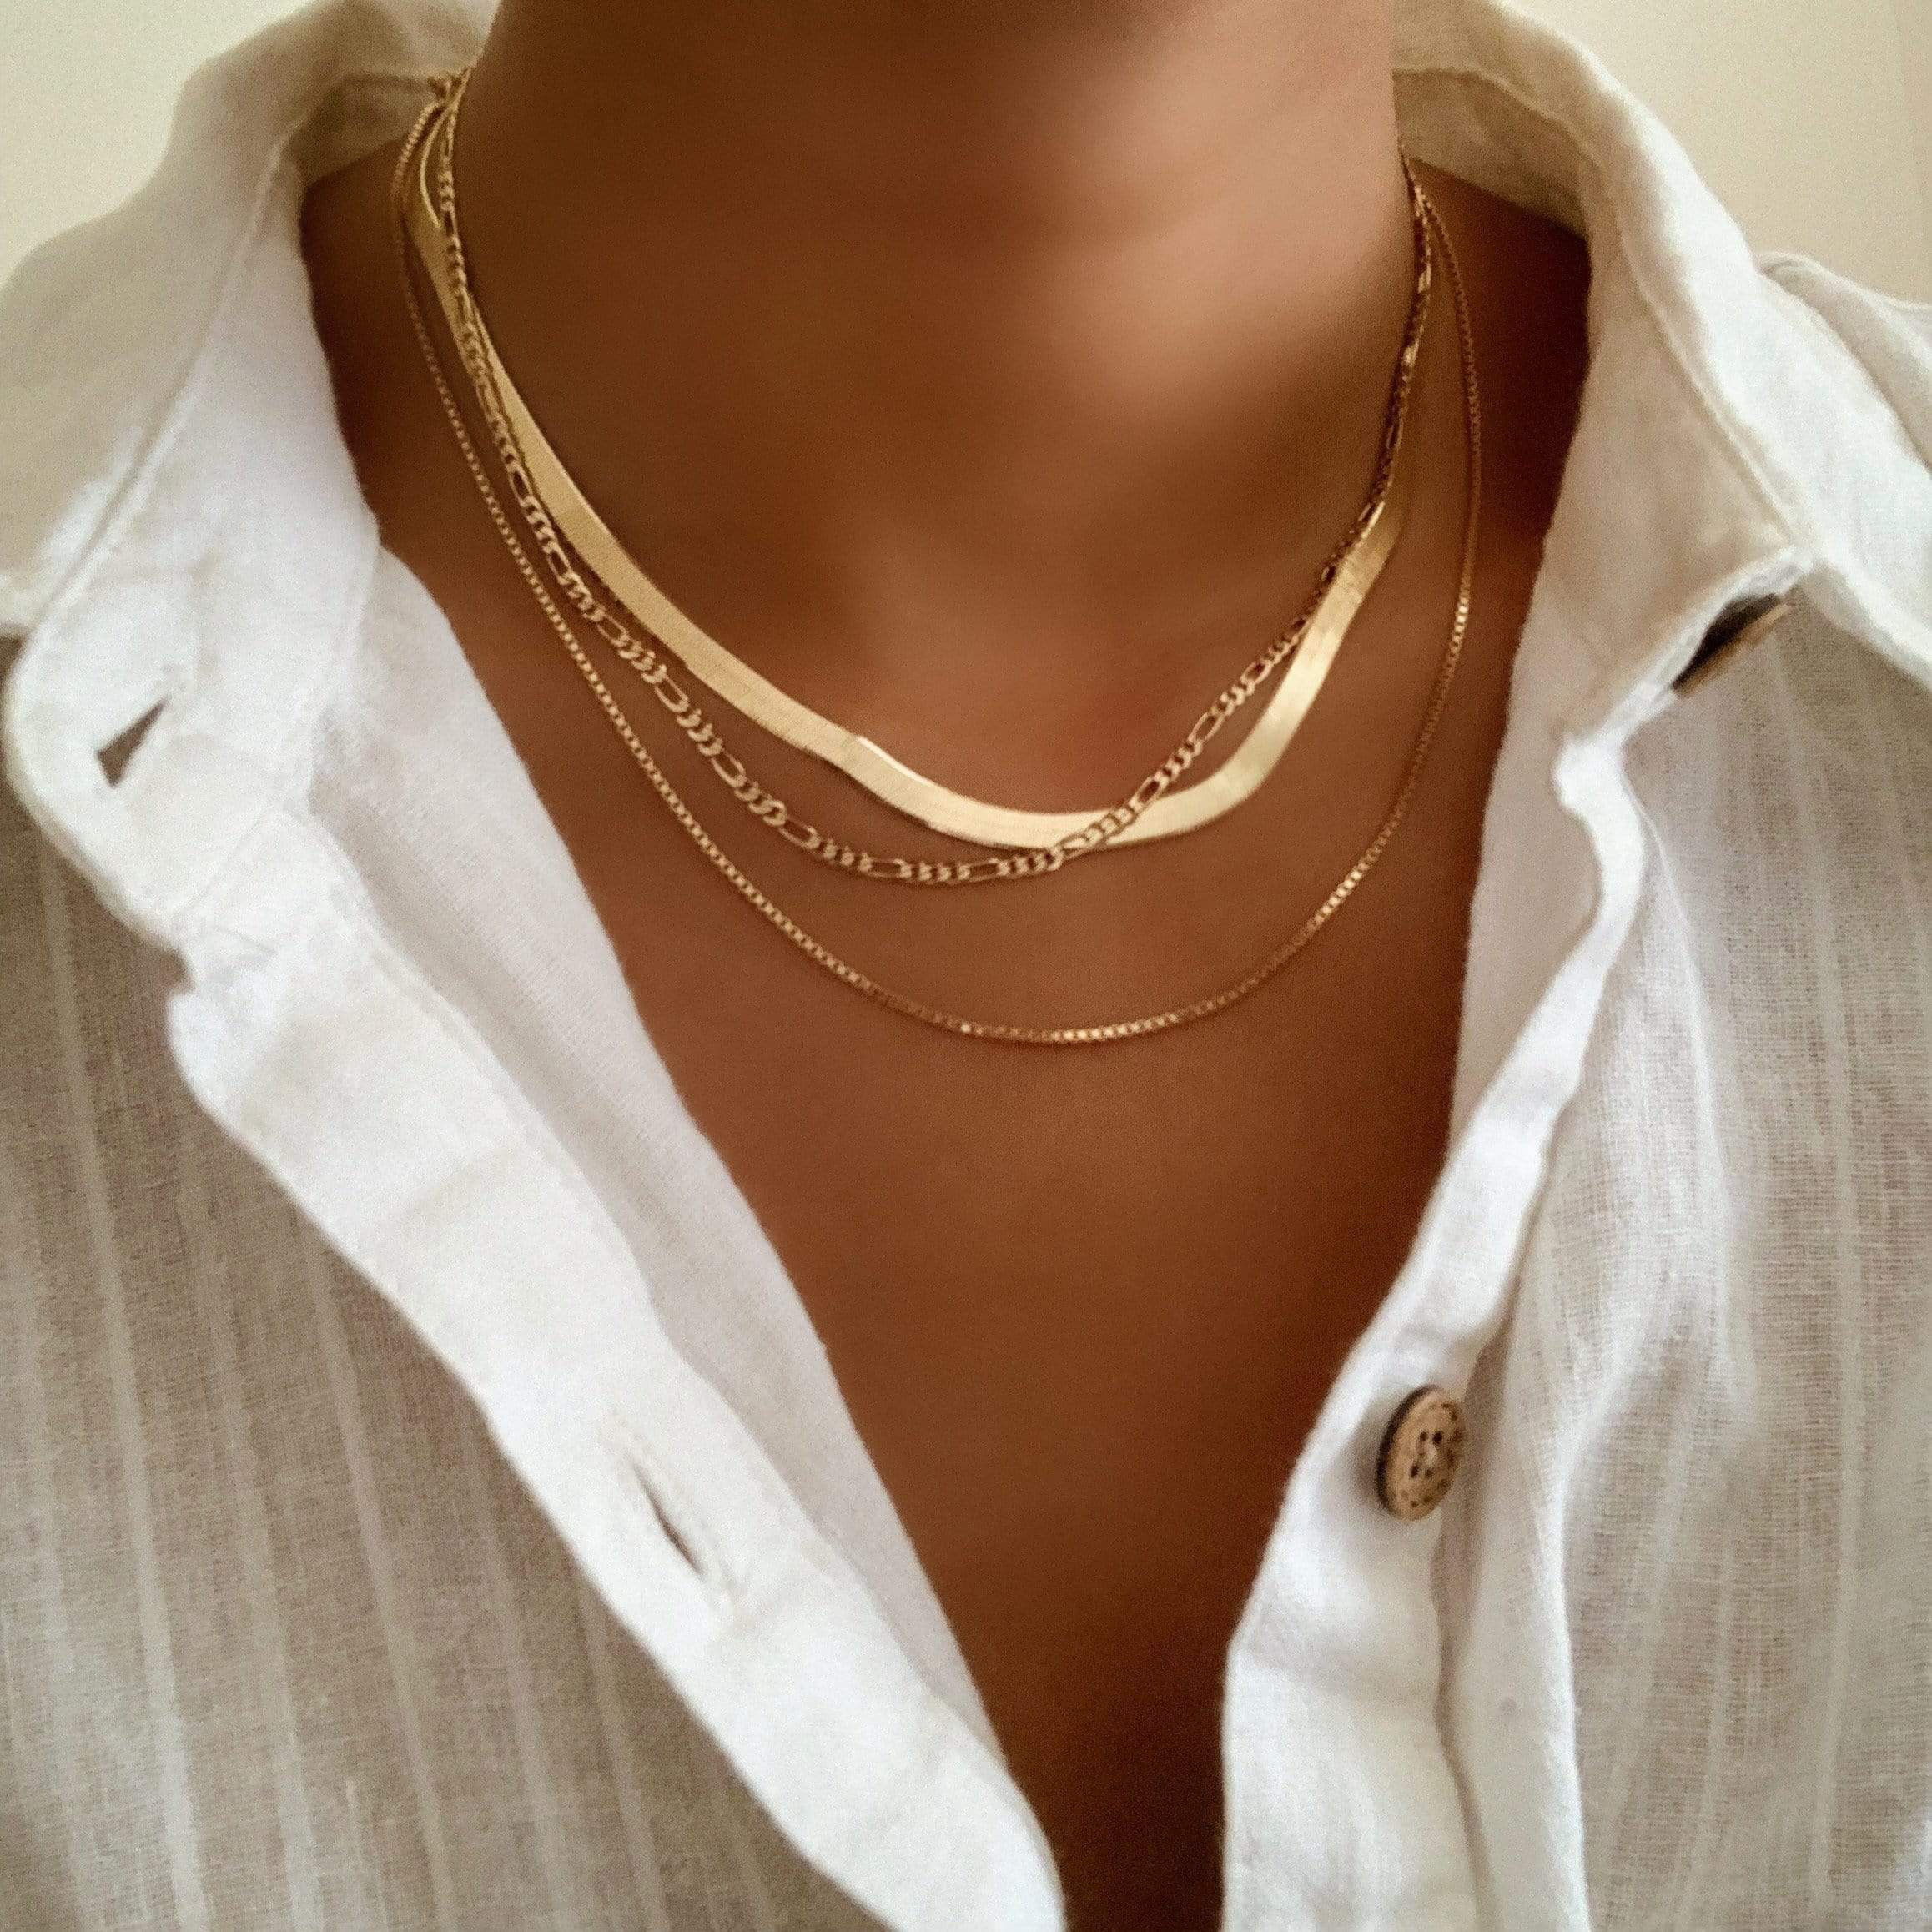 LE sensor necklace Thin Figaro Chain Necklace 16”